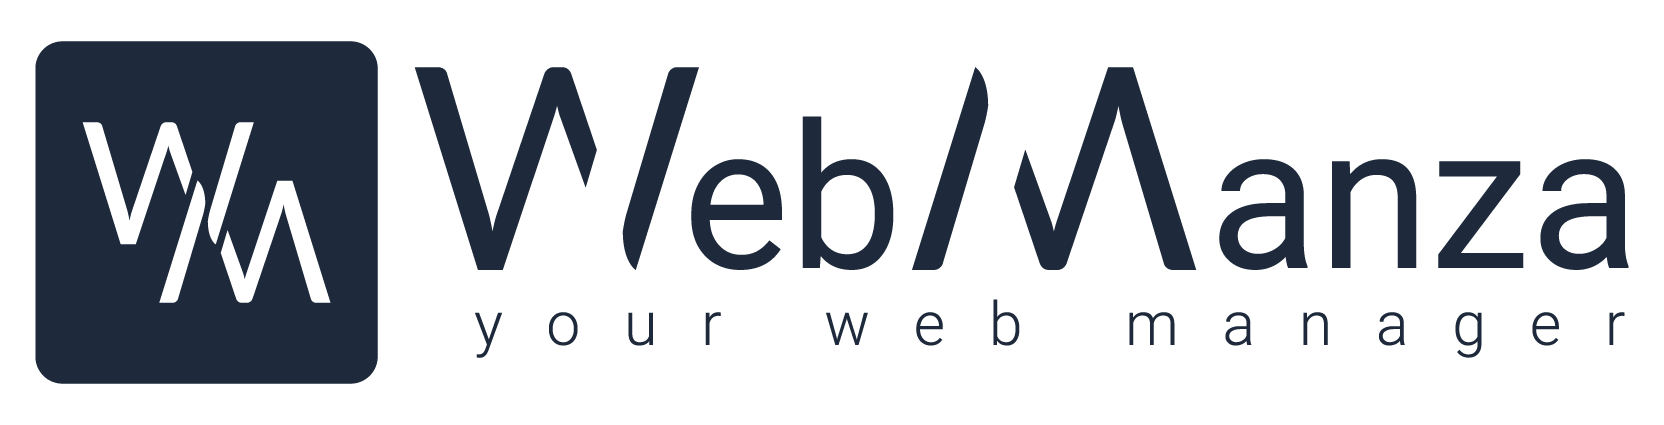 Webmanza logo